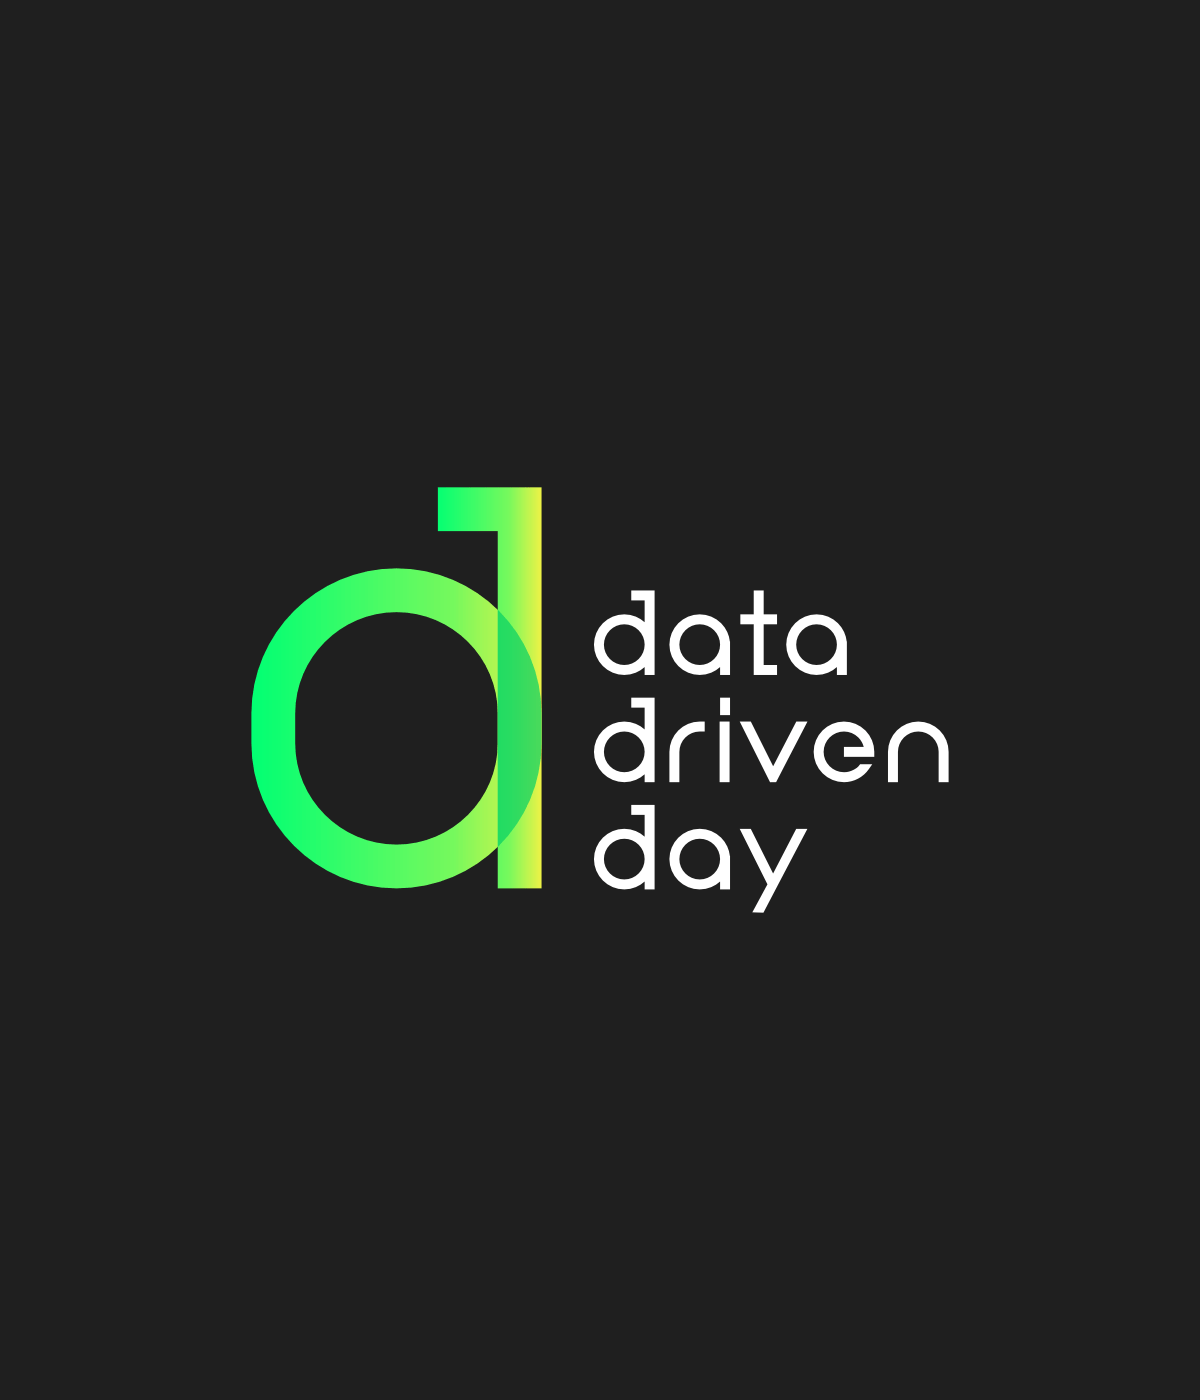 پروژه طراحی هویت بصری data driven day دیتا دریون دی